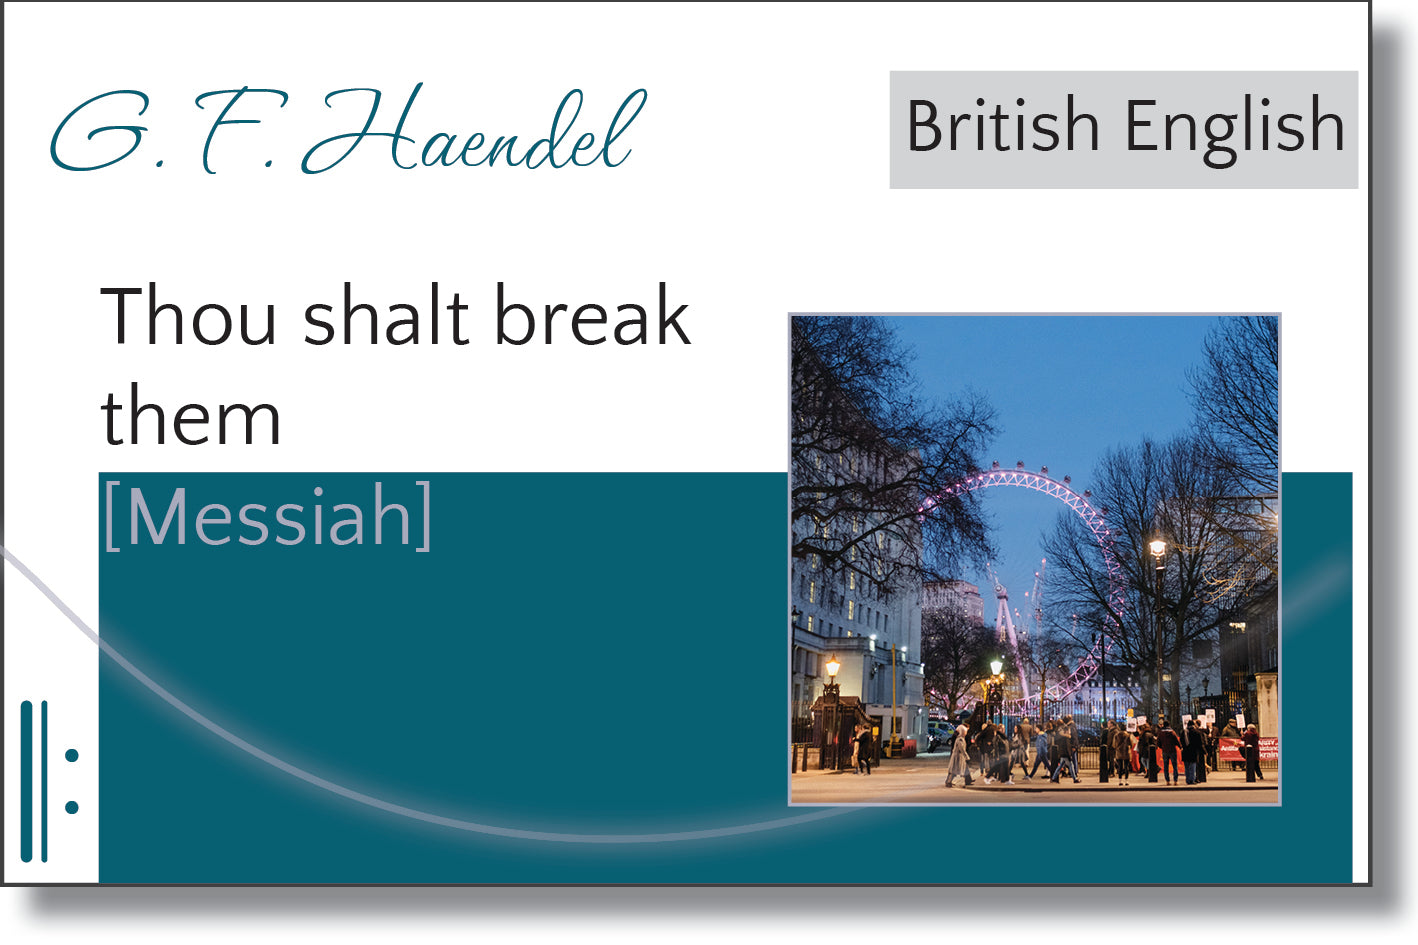 Messiah - Thou shalt break them